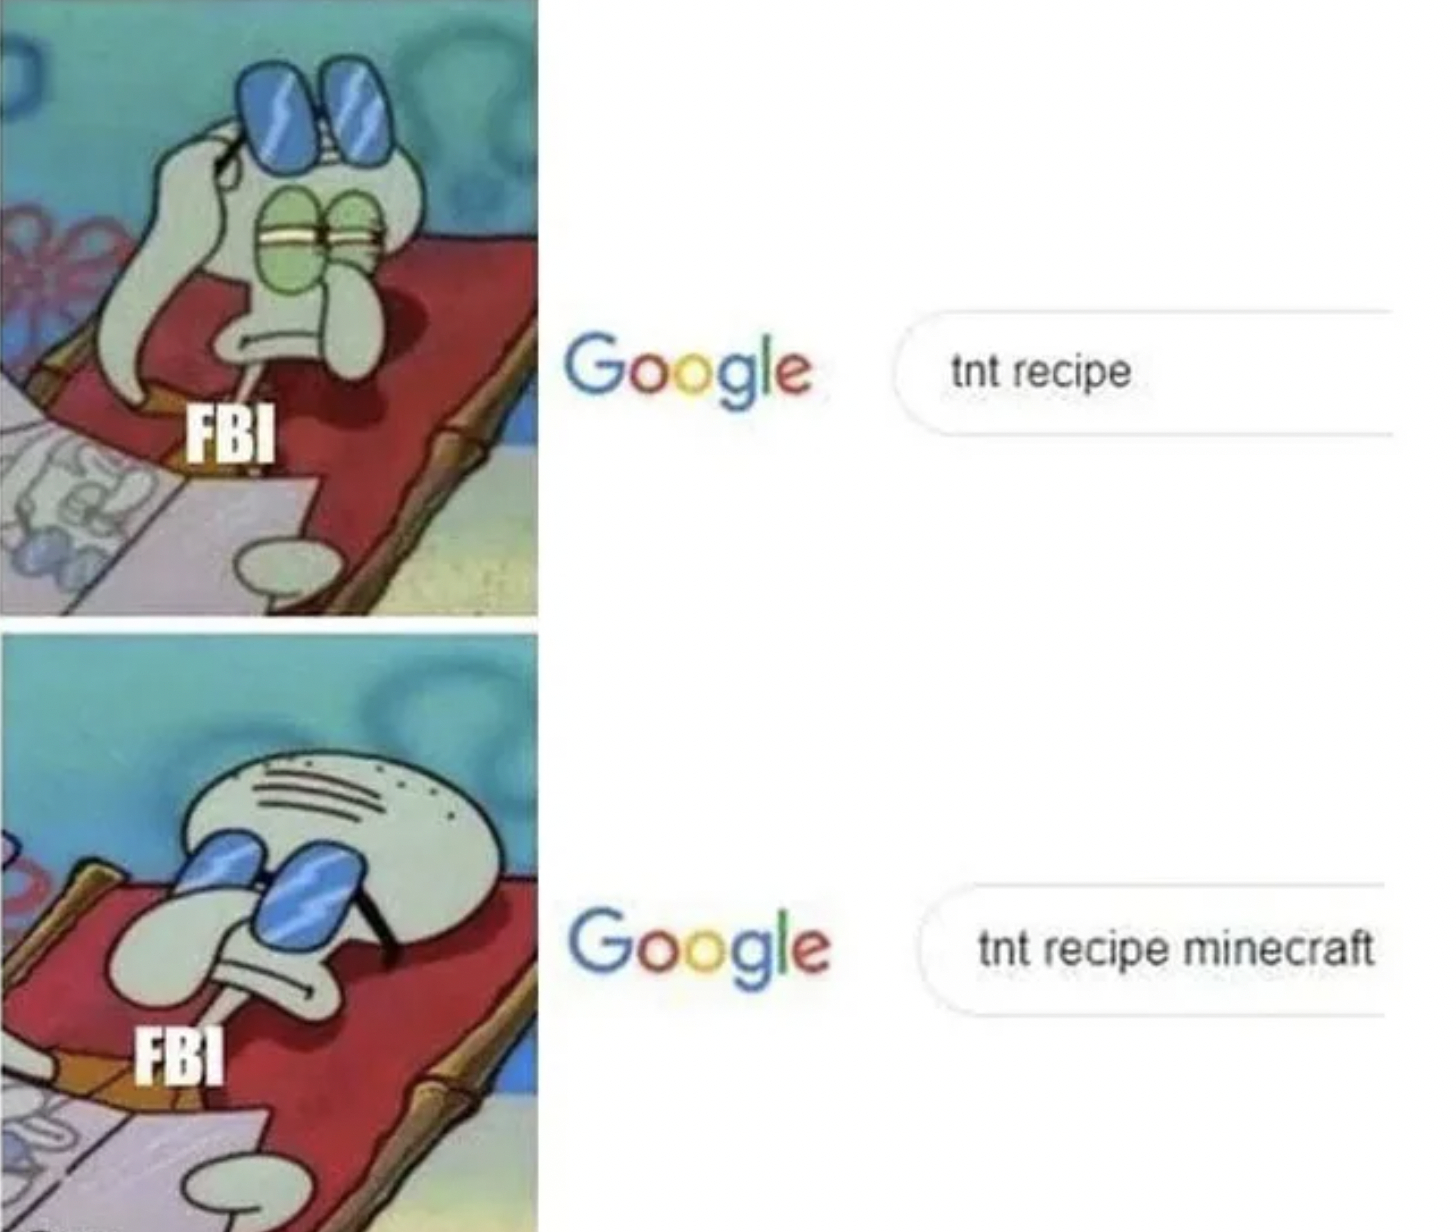 Dank Memes - minecraft tnt meme - Fbi FB1 Google Google tnt recipe tnt recipe minecraft